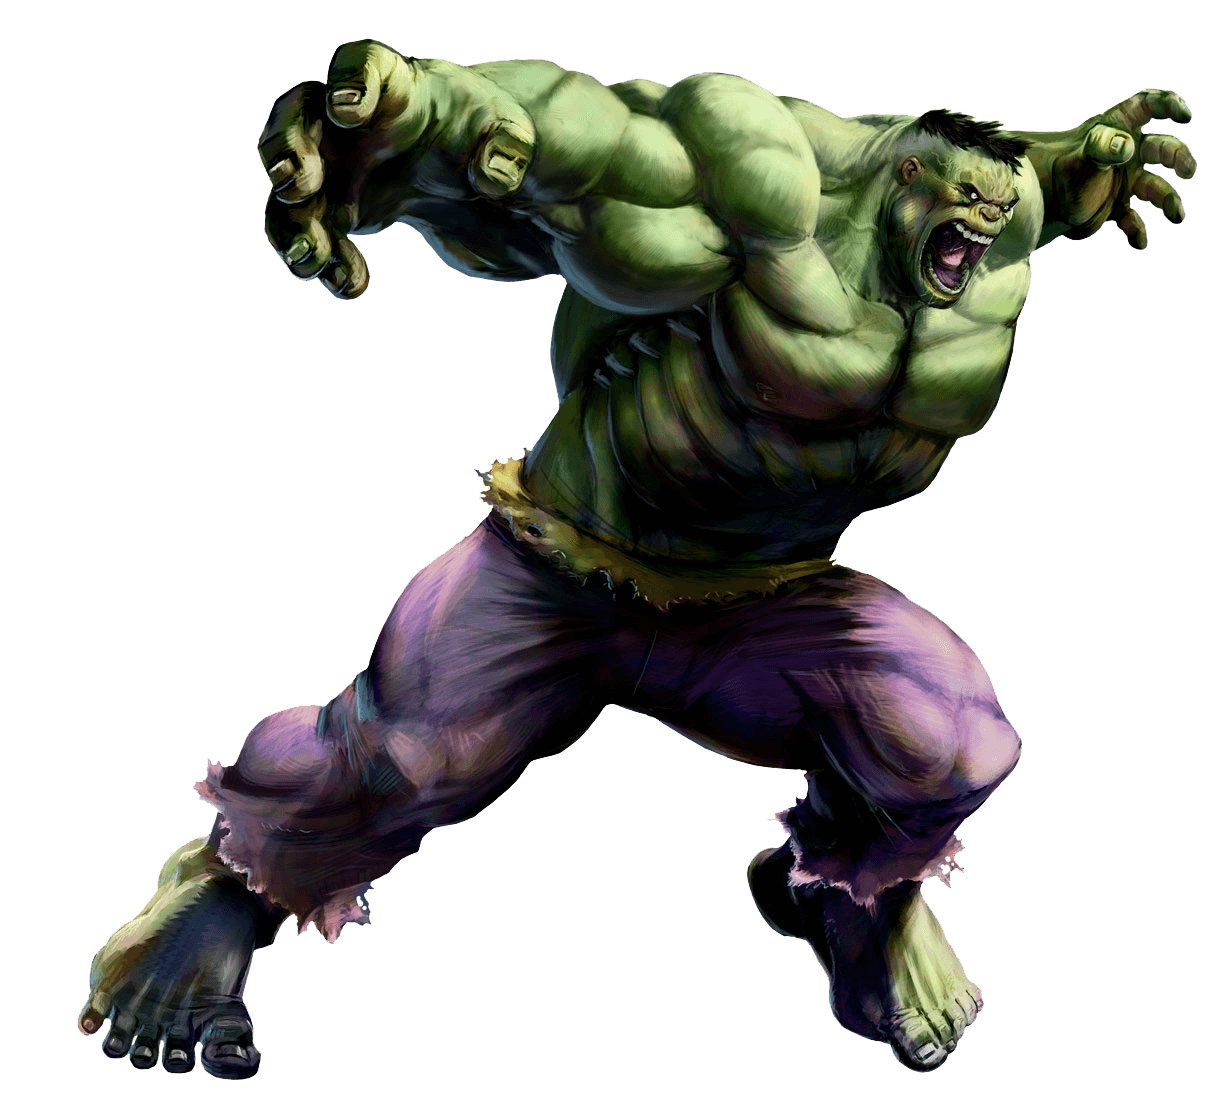 Download PNG image - The Incredible Hulk PNG Photo 